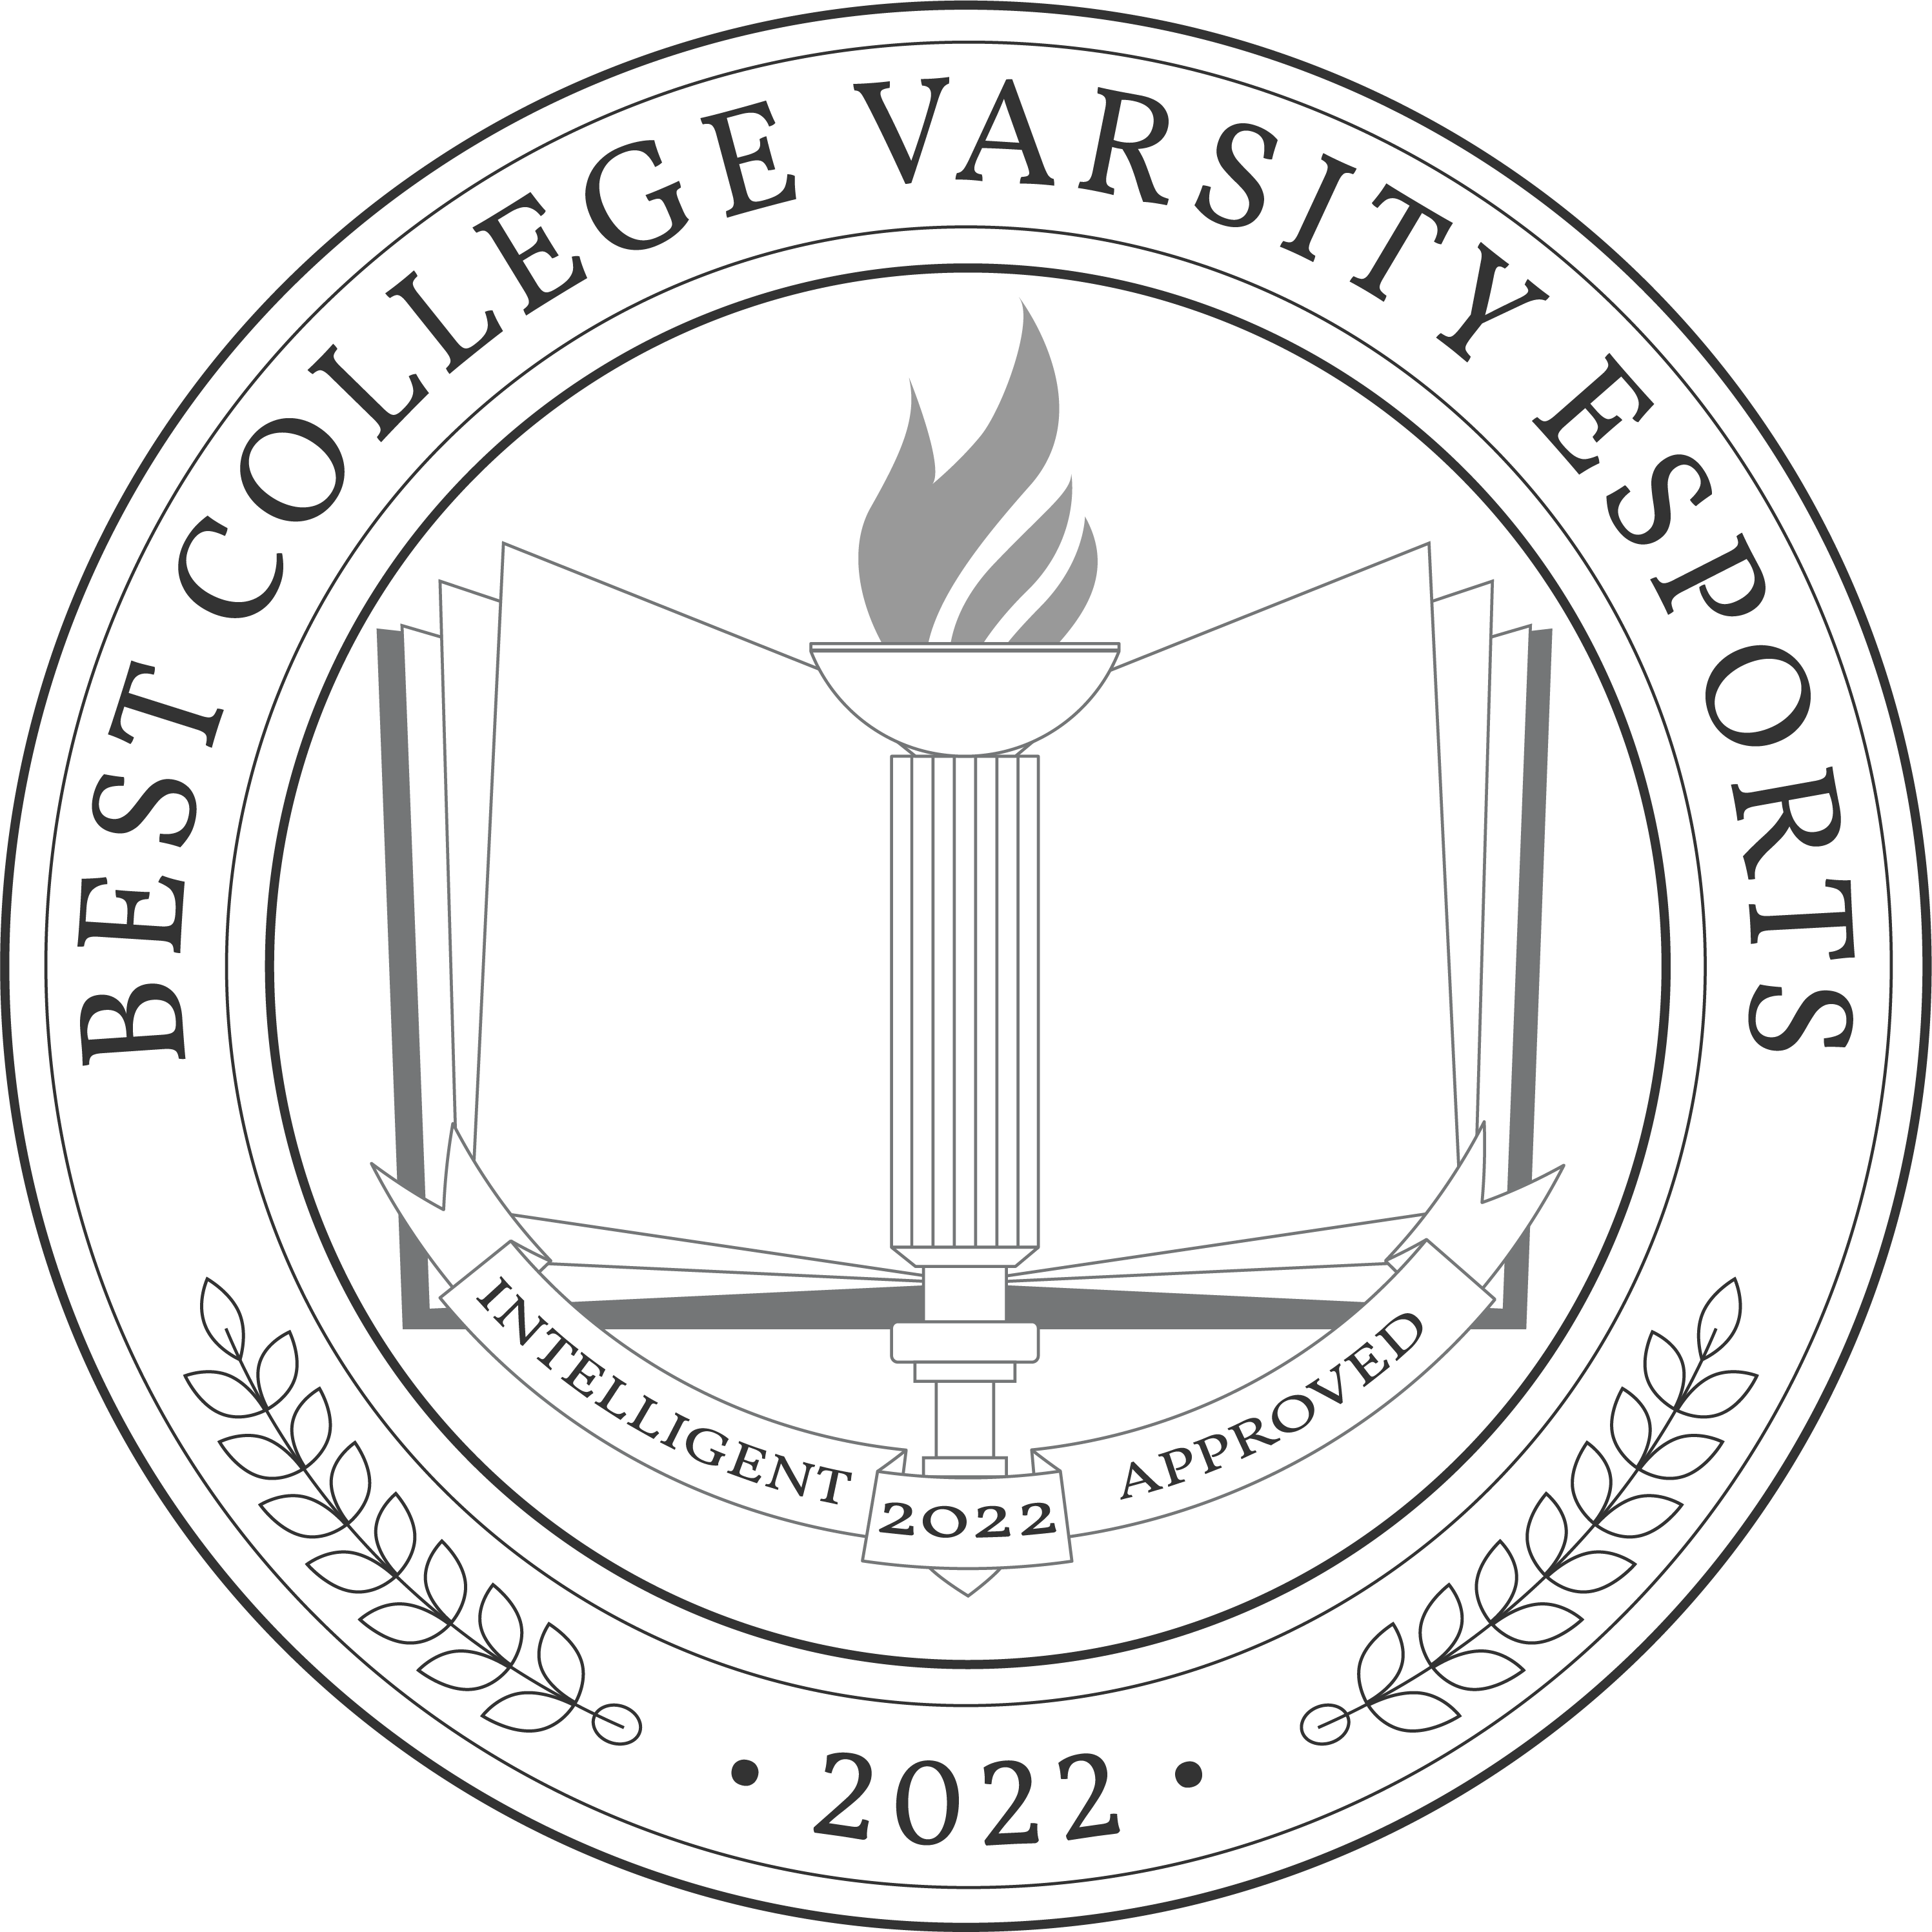 Best College Varsity 2022 Badge